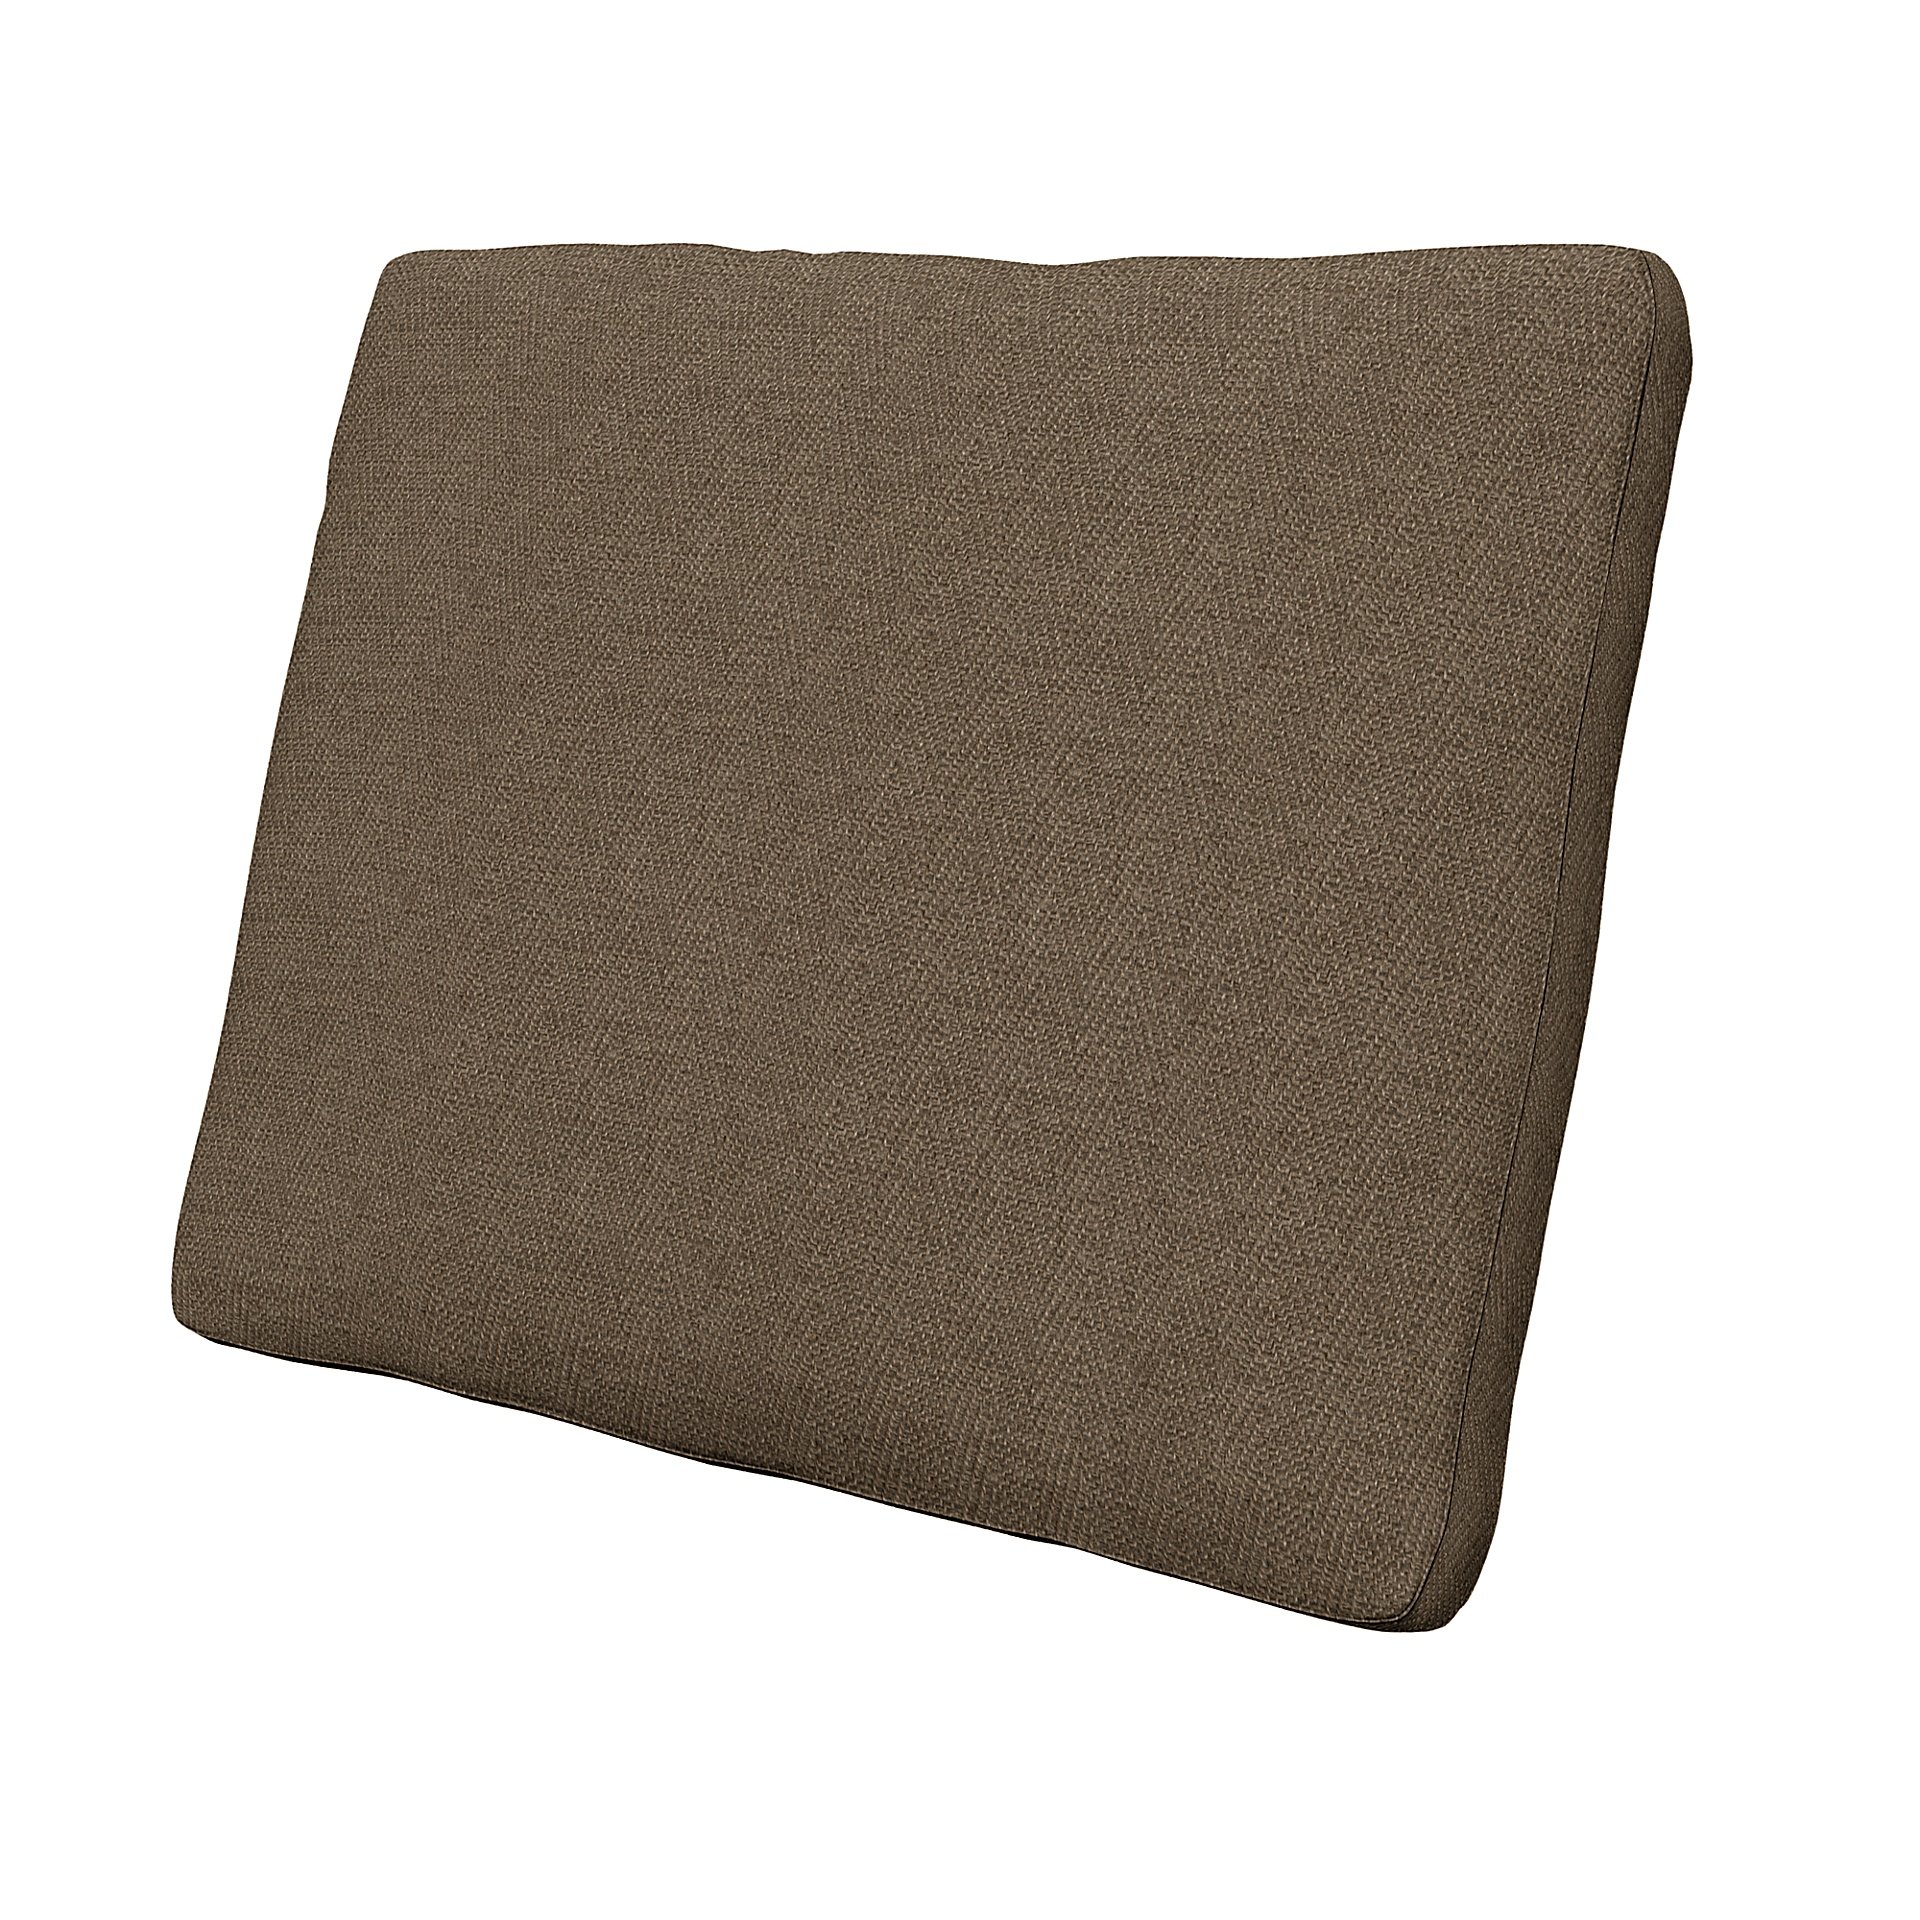 IKEA - Cushion Cover Karlstad 58x48x5 cm, Dark Taupe, Boucle & Texture - Bemz